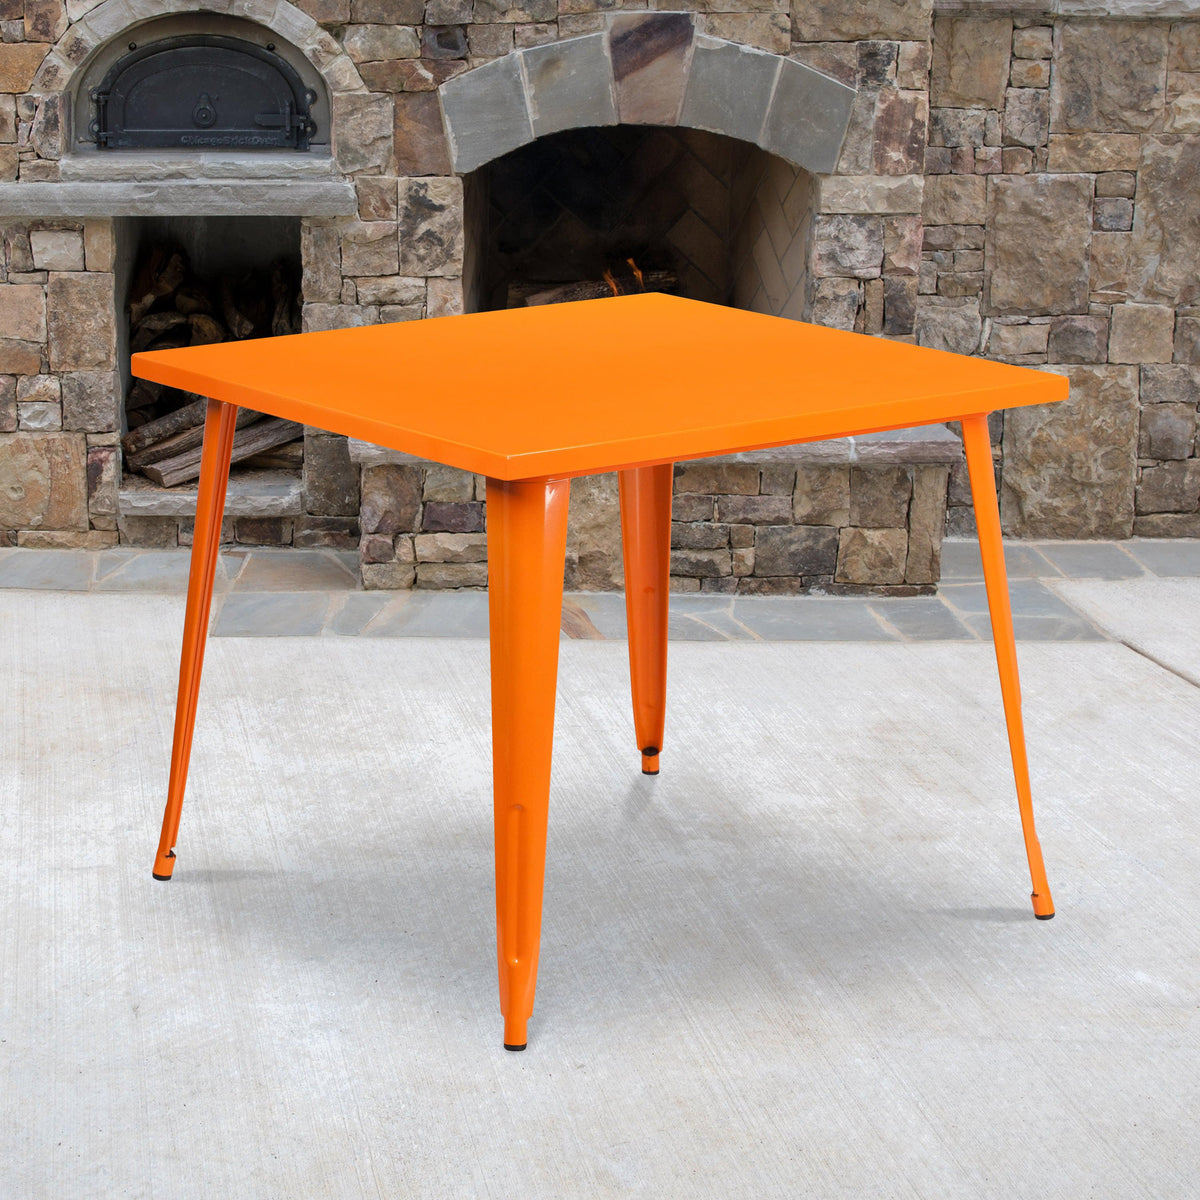 Orange |#| 35.5inch Square Orange Metal Indoor-Outdoor Table - Industrial Table